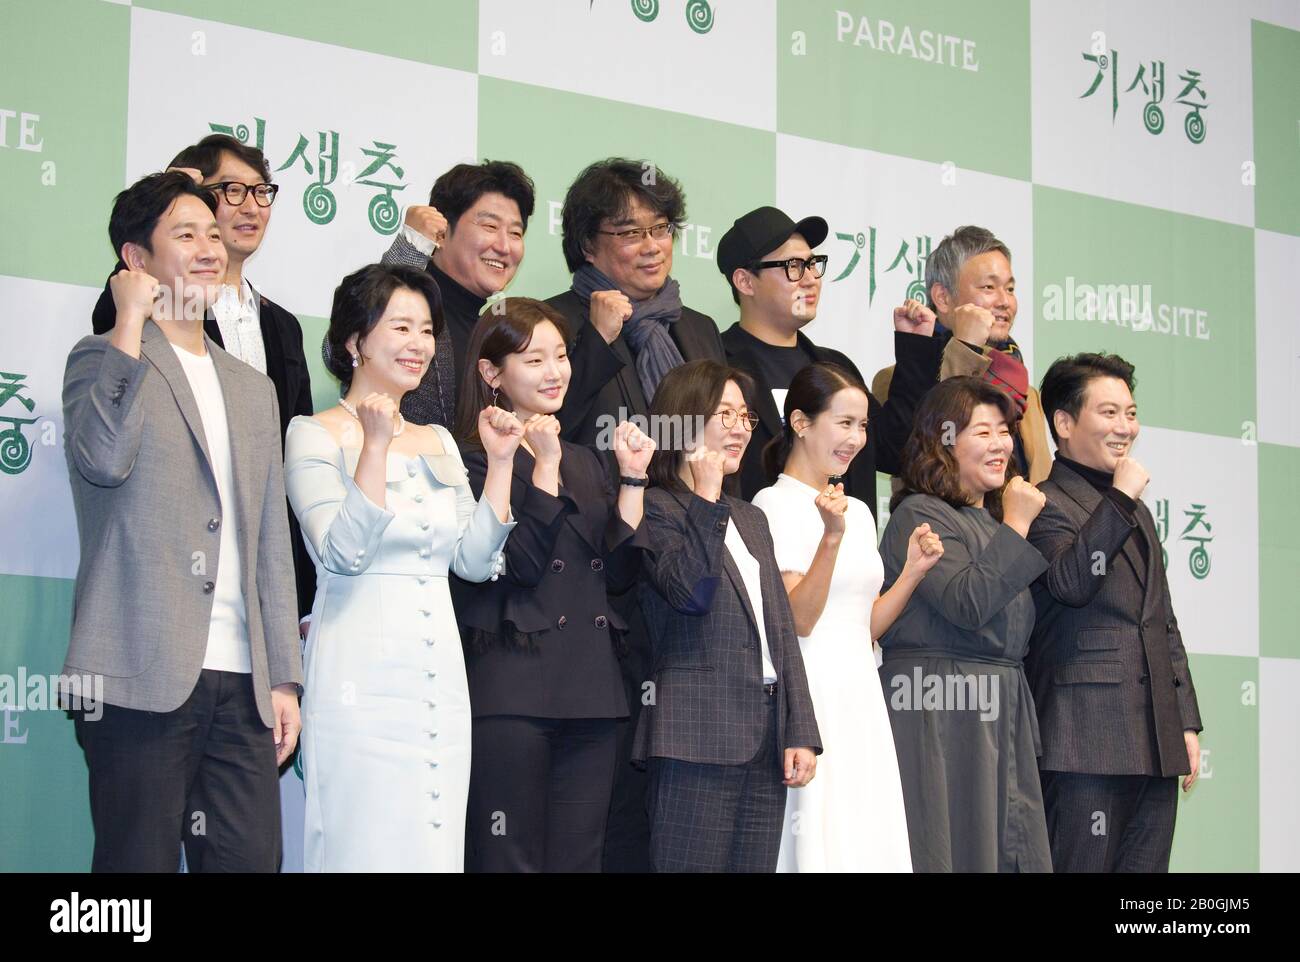 Yang Jin-Mo, Song Kang-Ho, Bong Joon-Ho, Han Jin-Won, Lee Ha-Jun, Lee Sun-Kyun, Jang Hye-Jin, Park So-Dam, Kwak Sin-Ae, Cho Yeo-Jeong, Lee Jung-Eun and Park Myung-Hoon, Feb 19, 2020 : (L-R, 2nd row) Film editor Yang Jin-Mo, actor Song Kang-Ho, director Bong Joon-Ho, screenwriter Han Jin-Won and production designer Lee Ha-Jun pose with (L-R, front row) cast members Lee Sun-Kyun, Jang Hye-Jin, Park So-Dam, film producer Kwak Sin-Ae, cast members Cho Yeo-Jeong, Lee Jung-Eun and Park Myung-Hoon during a press conference held for their Oscar-winning film 'Parasite' in Seoul, South Korea. The Korean Stock Photo